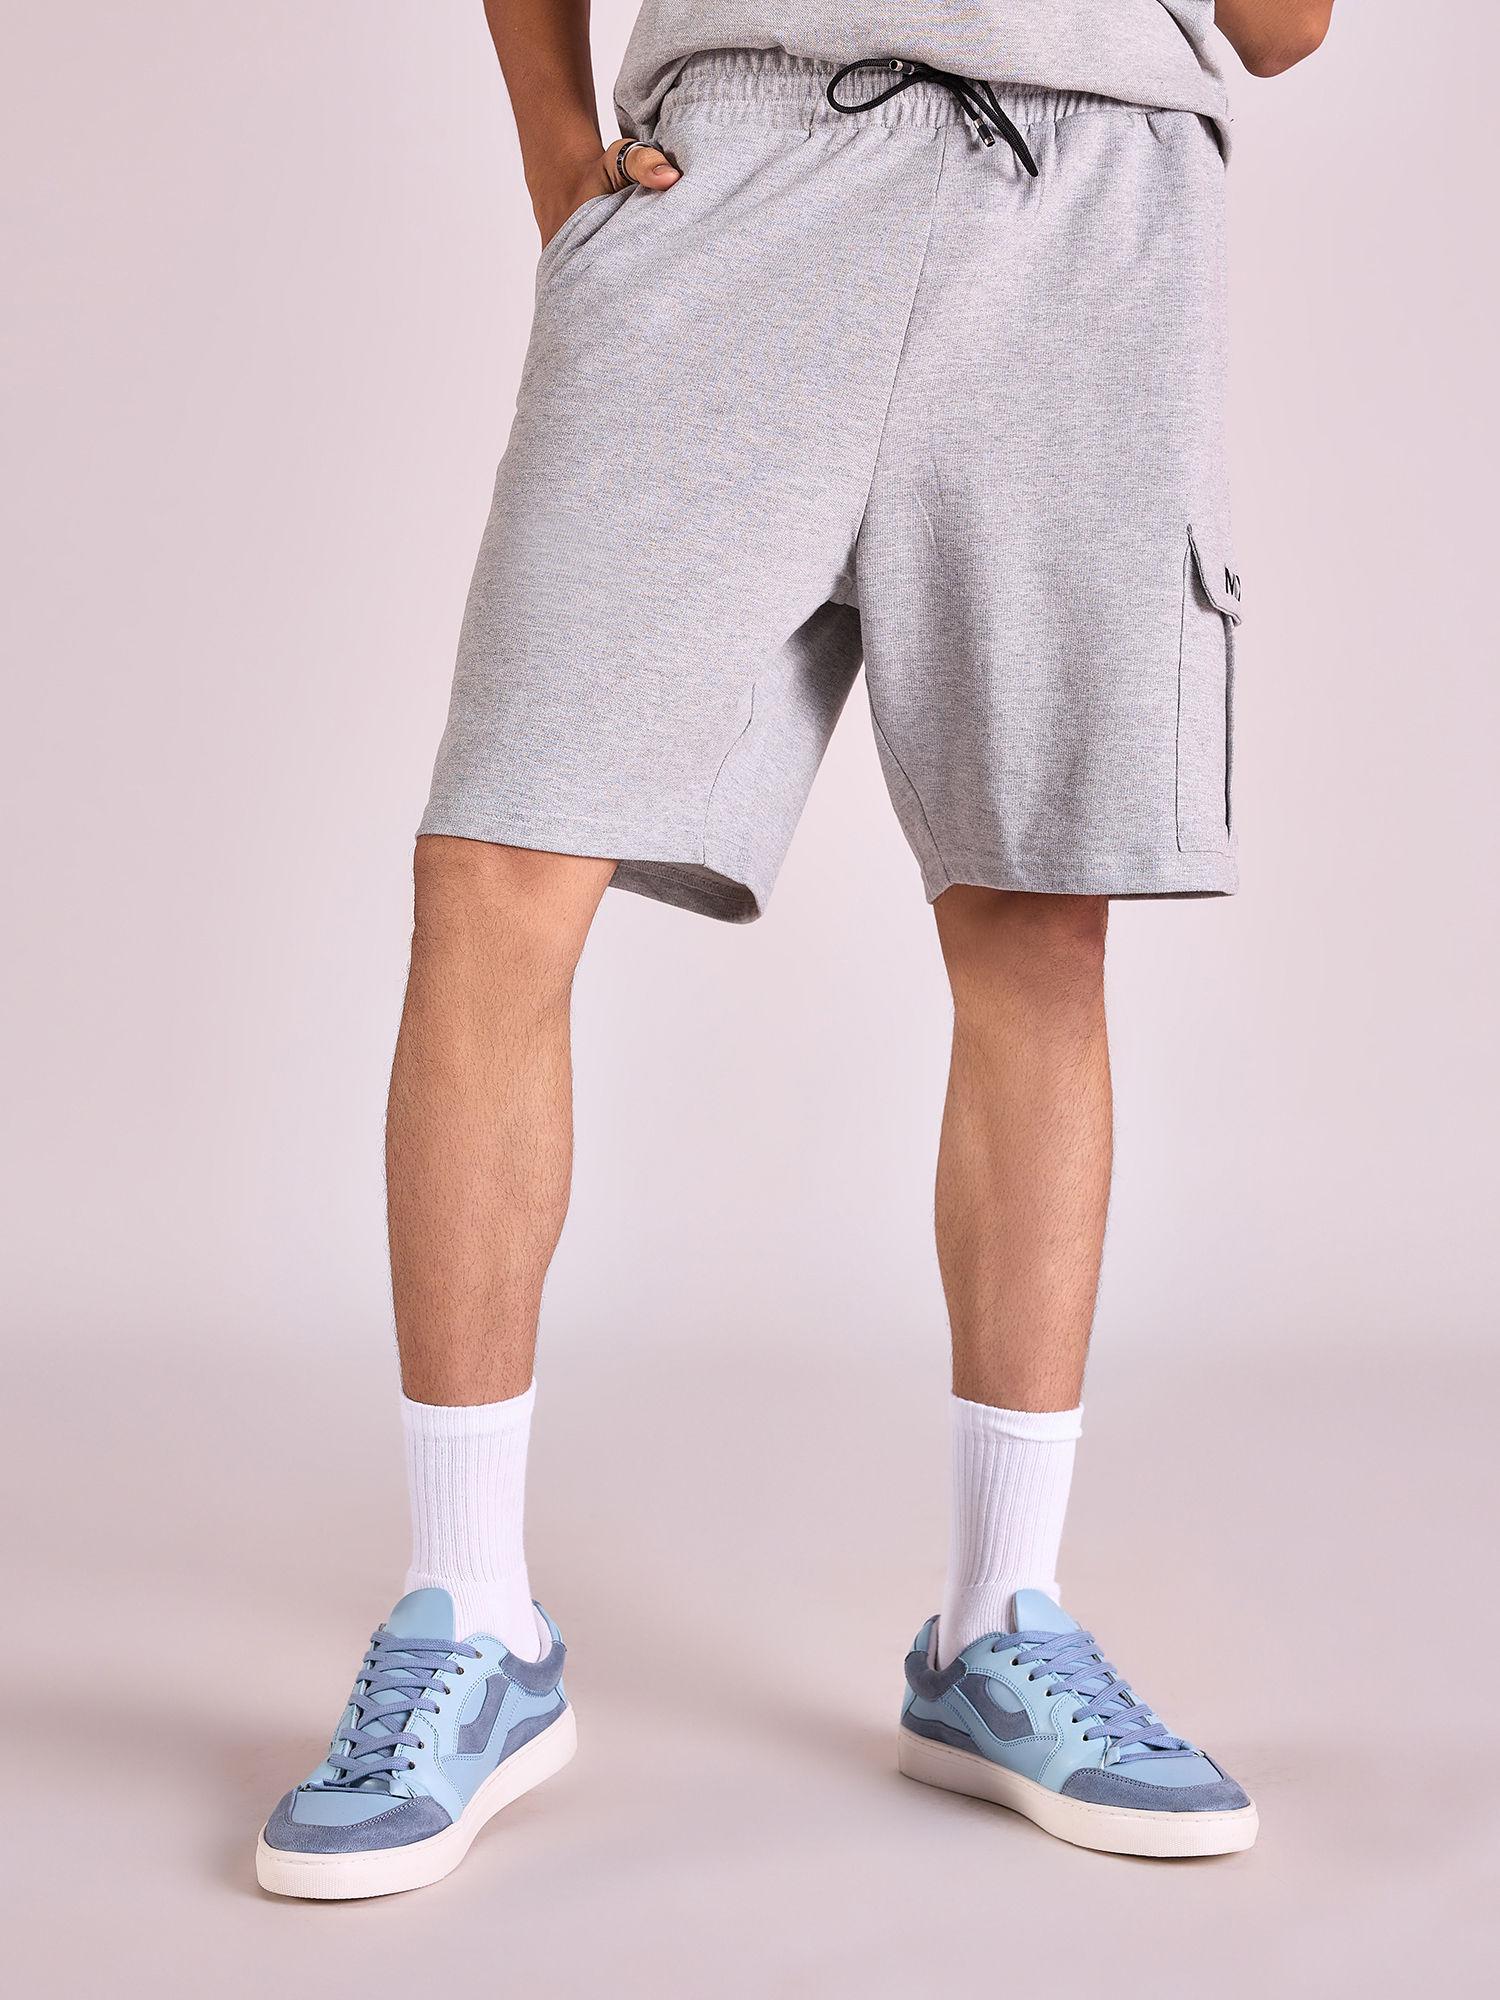 grey solid knee length shorts